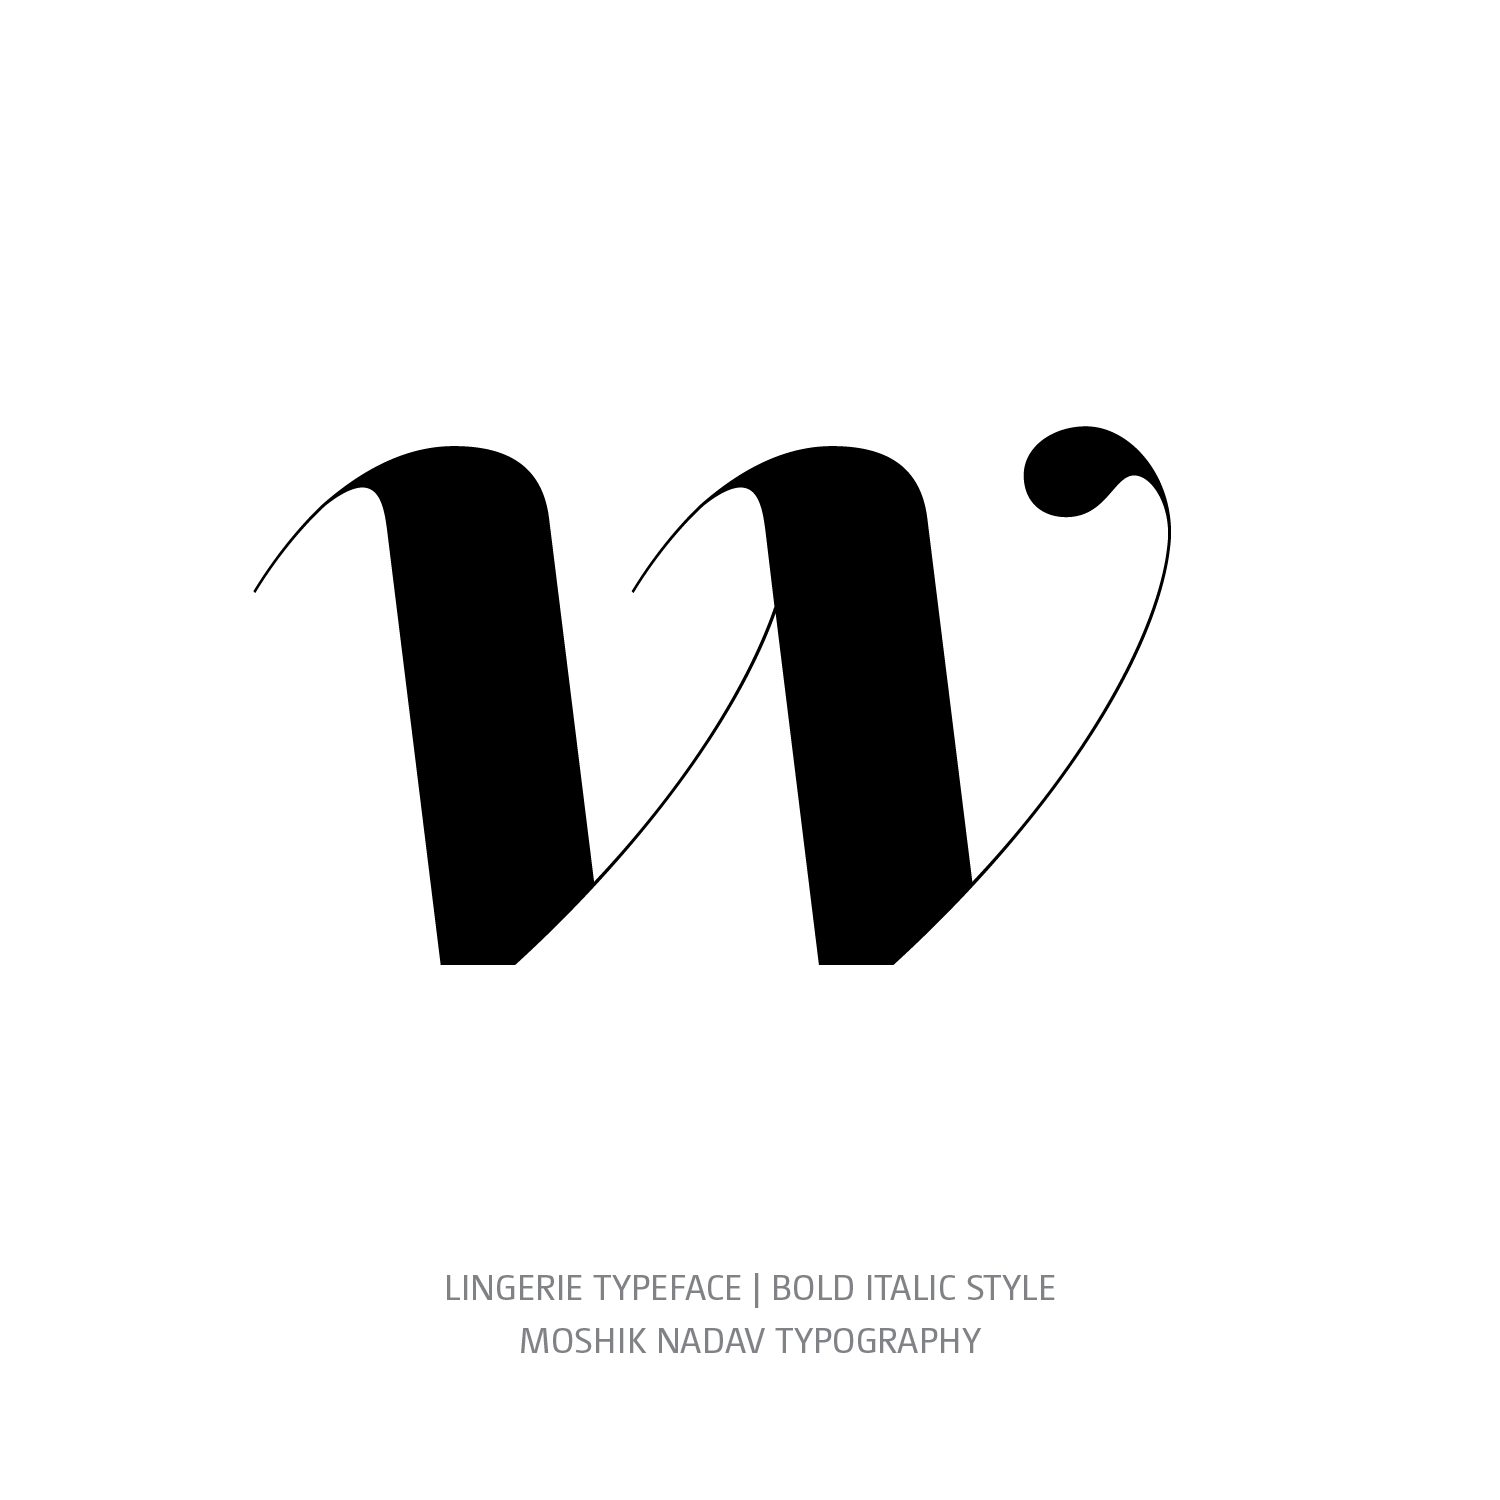 Lingerie Typeface Bold Italic w